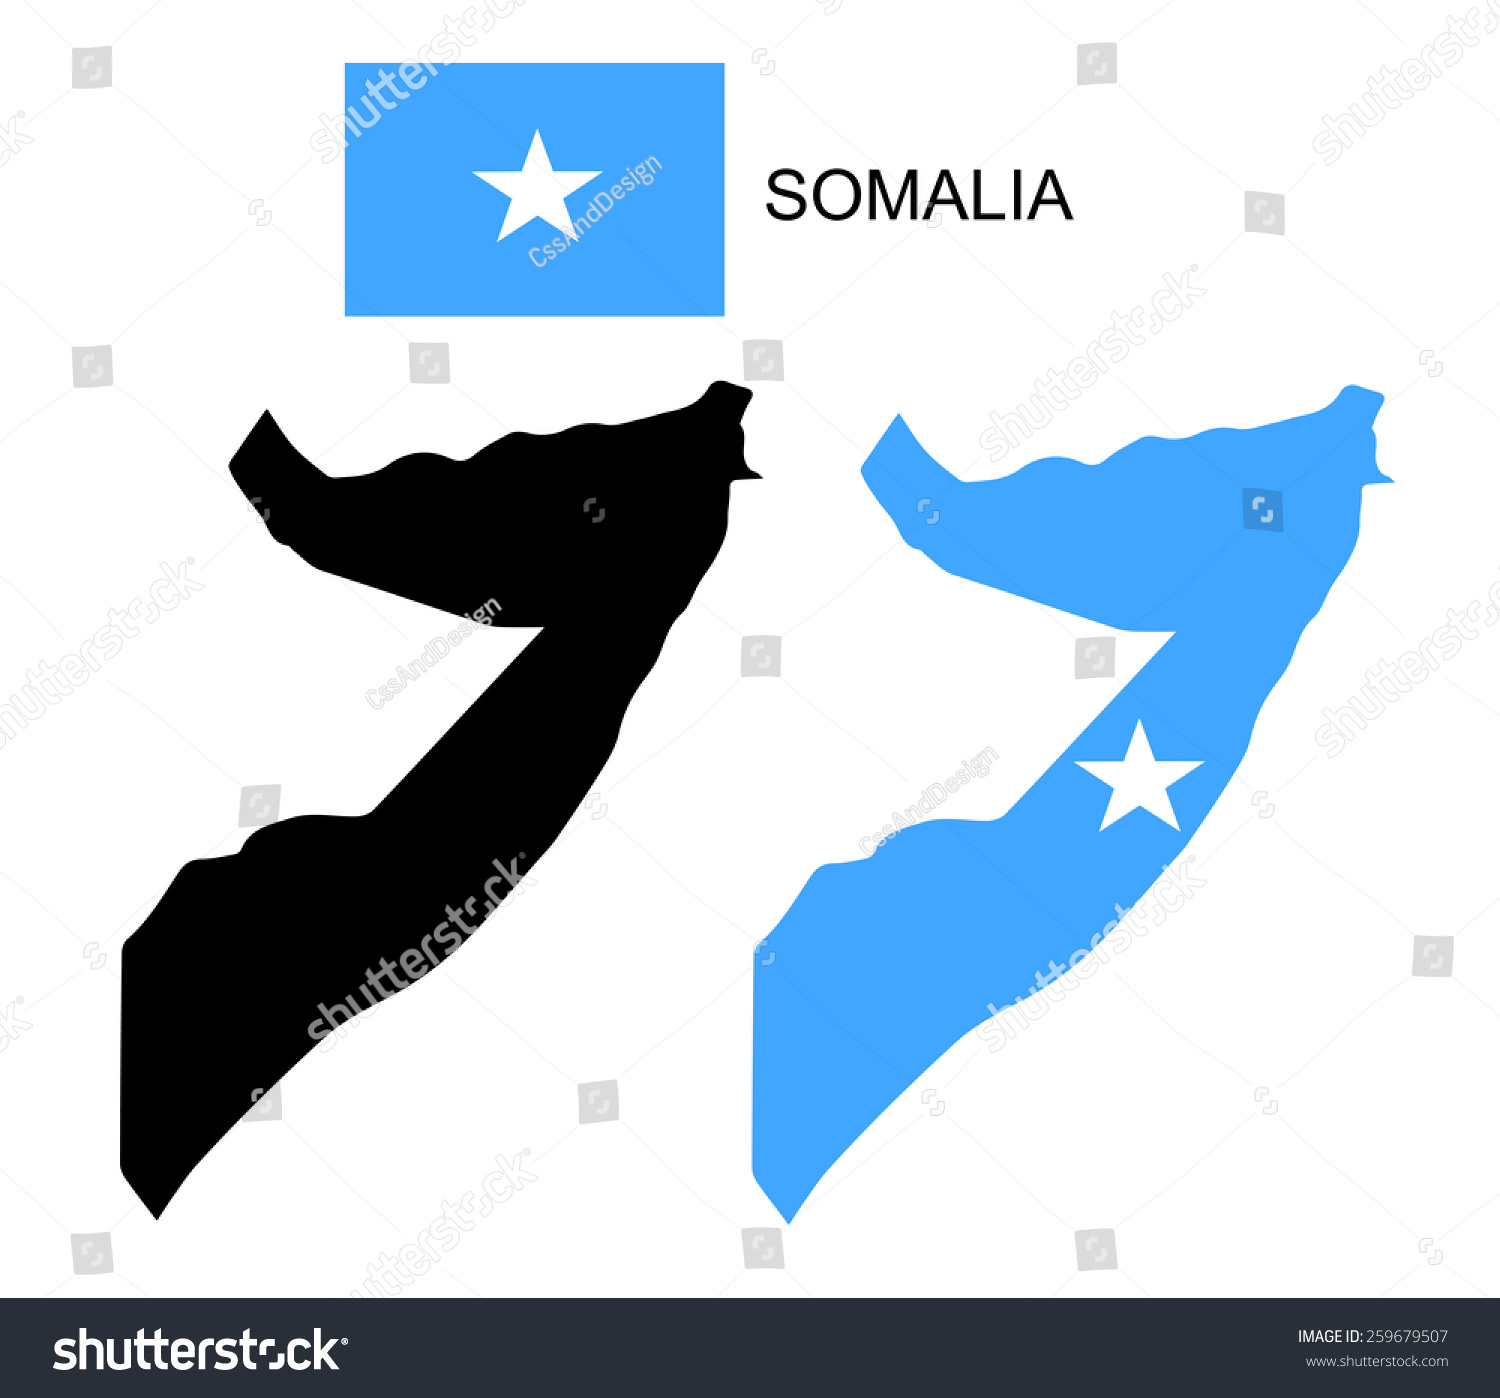 Somalia Map And Flag Vector Somalia Map Royalty Free Stock Vector 259679507 